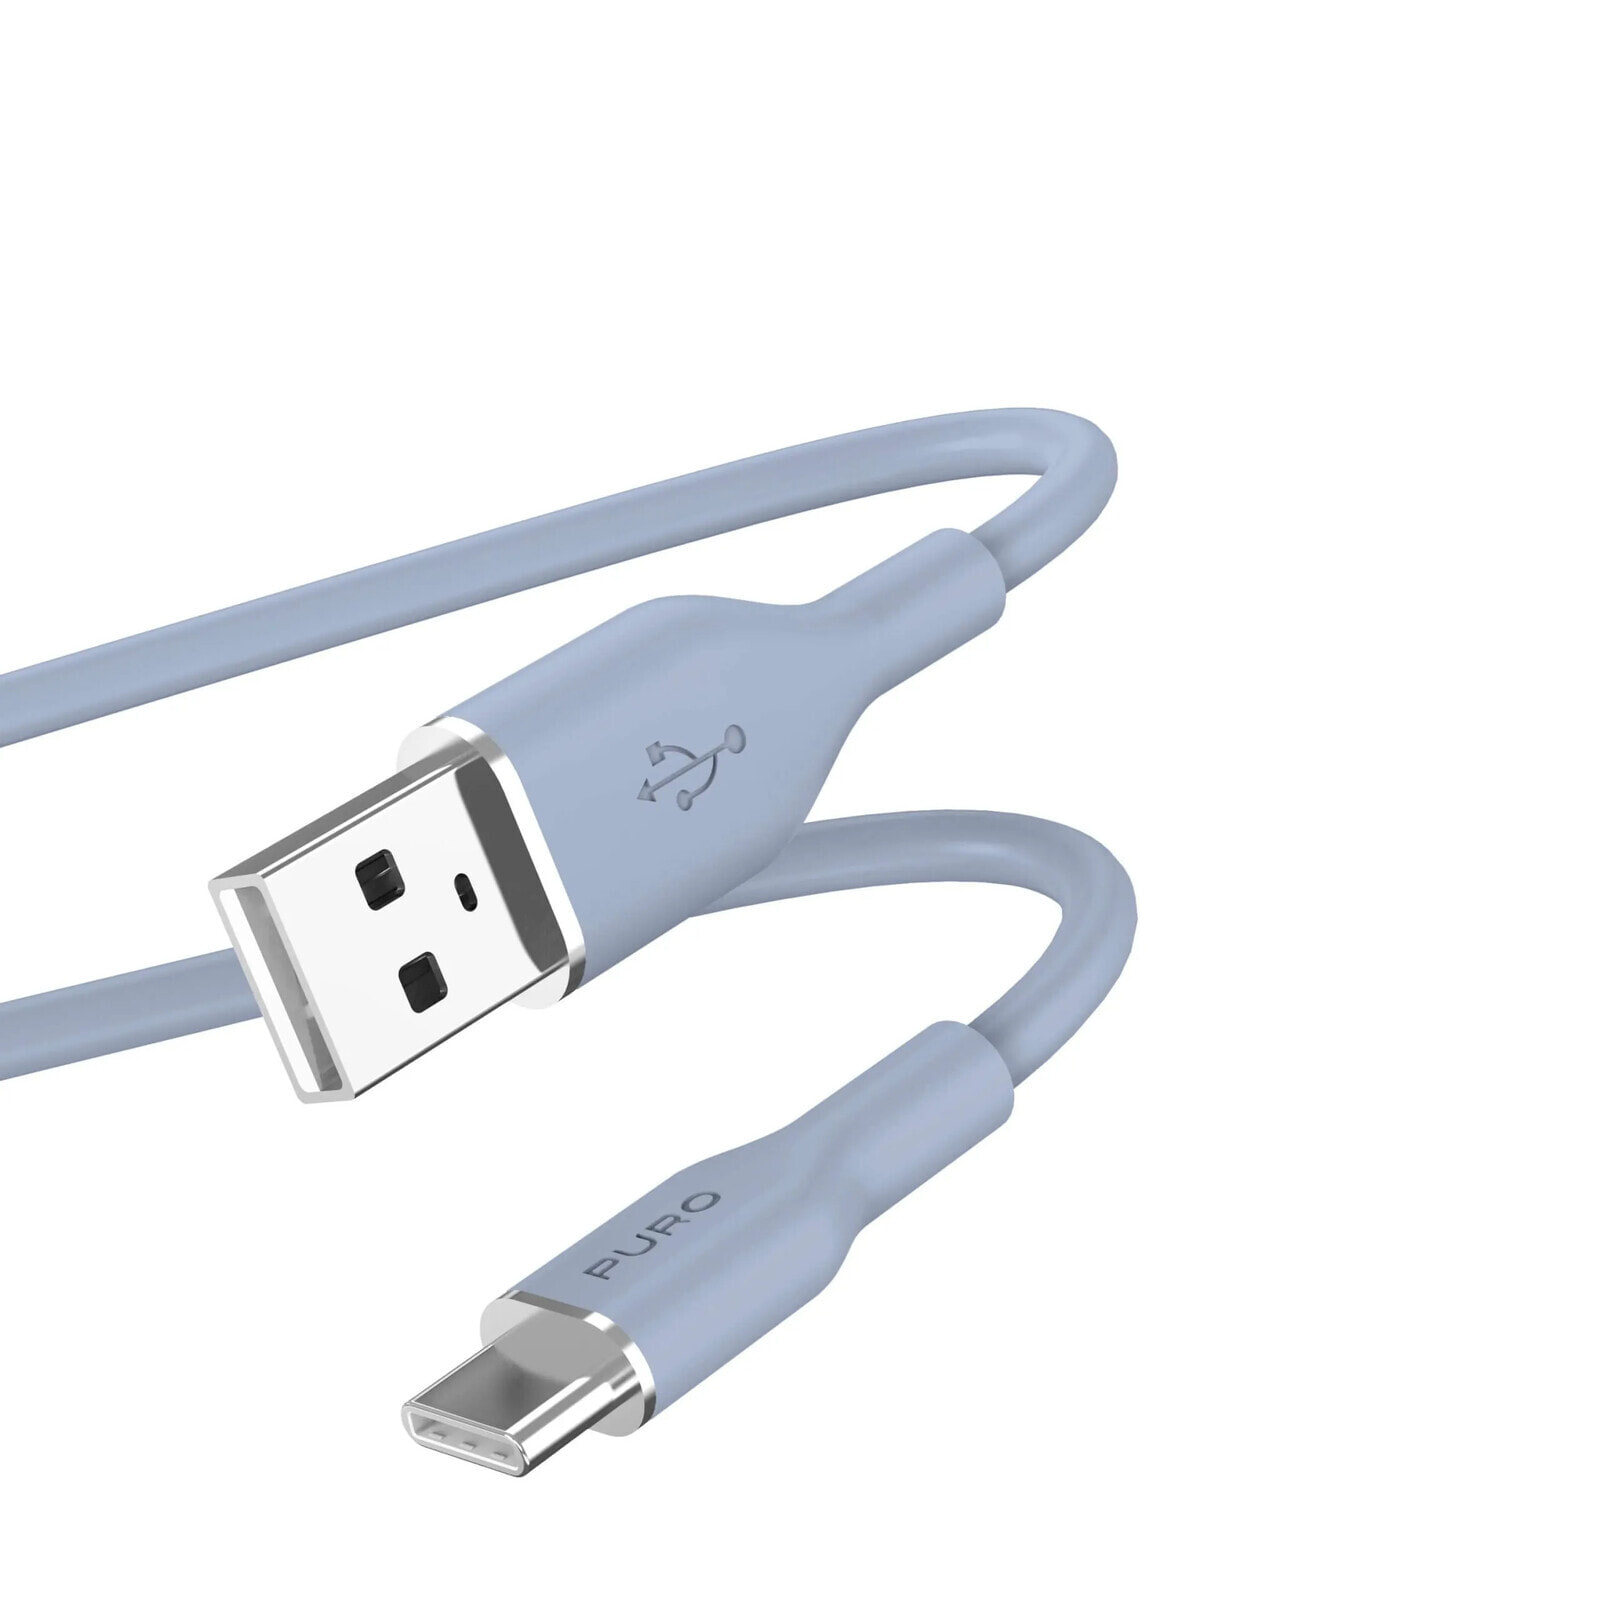 SBS Puro USB zu USB-C Kabel 1.5m hellblau - Cable - Digital